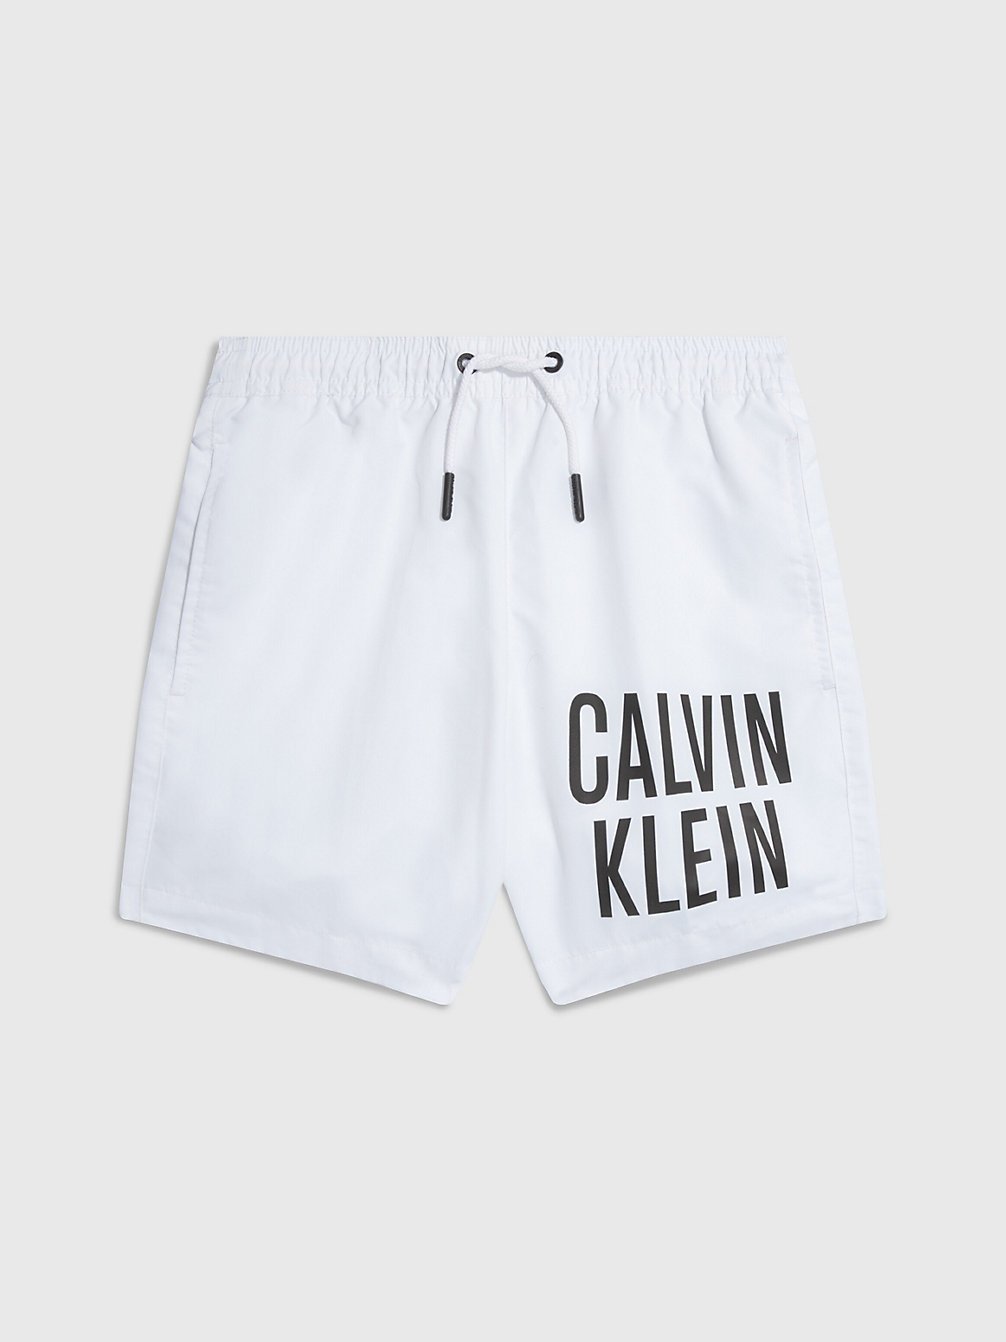 PVH CLASSIC WHITE Boxer De Bain Pour Garçon - Intense Power undefined garcons Calvin Klein